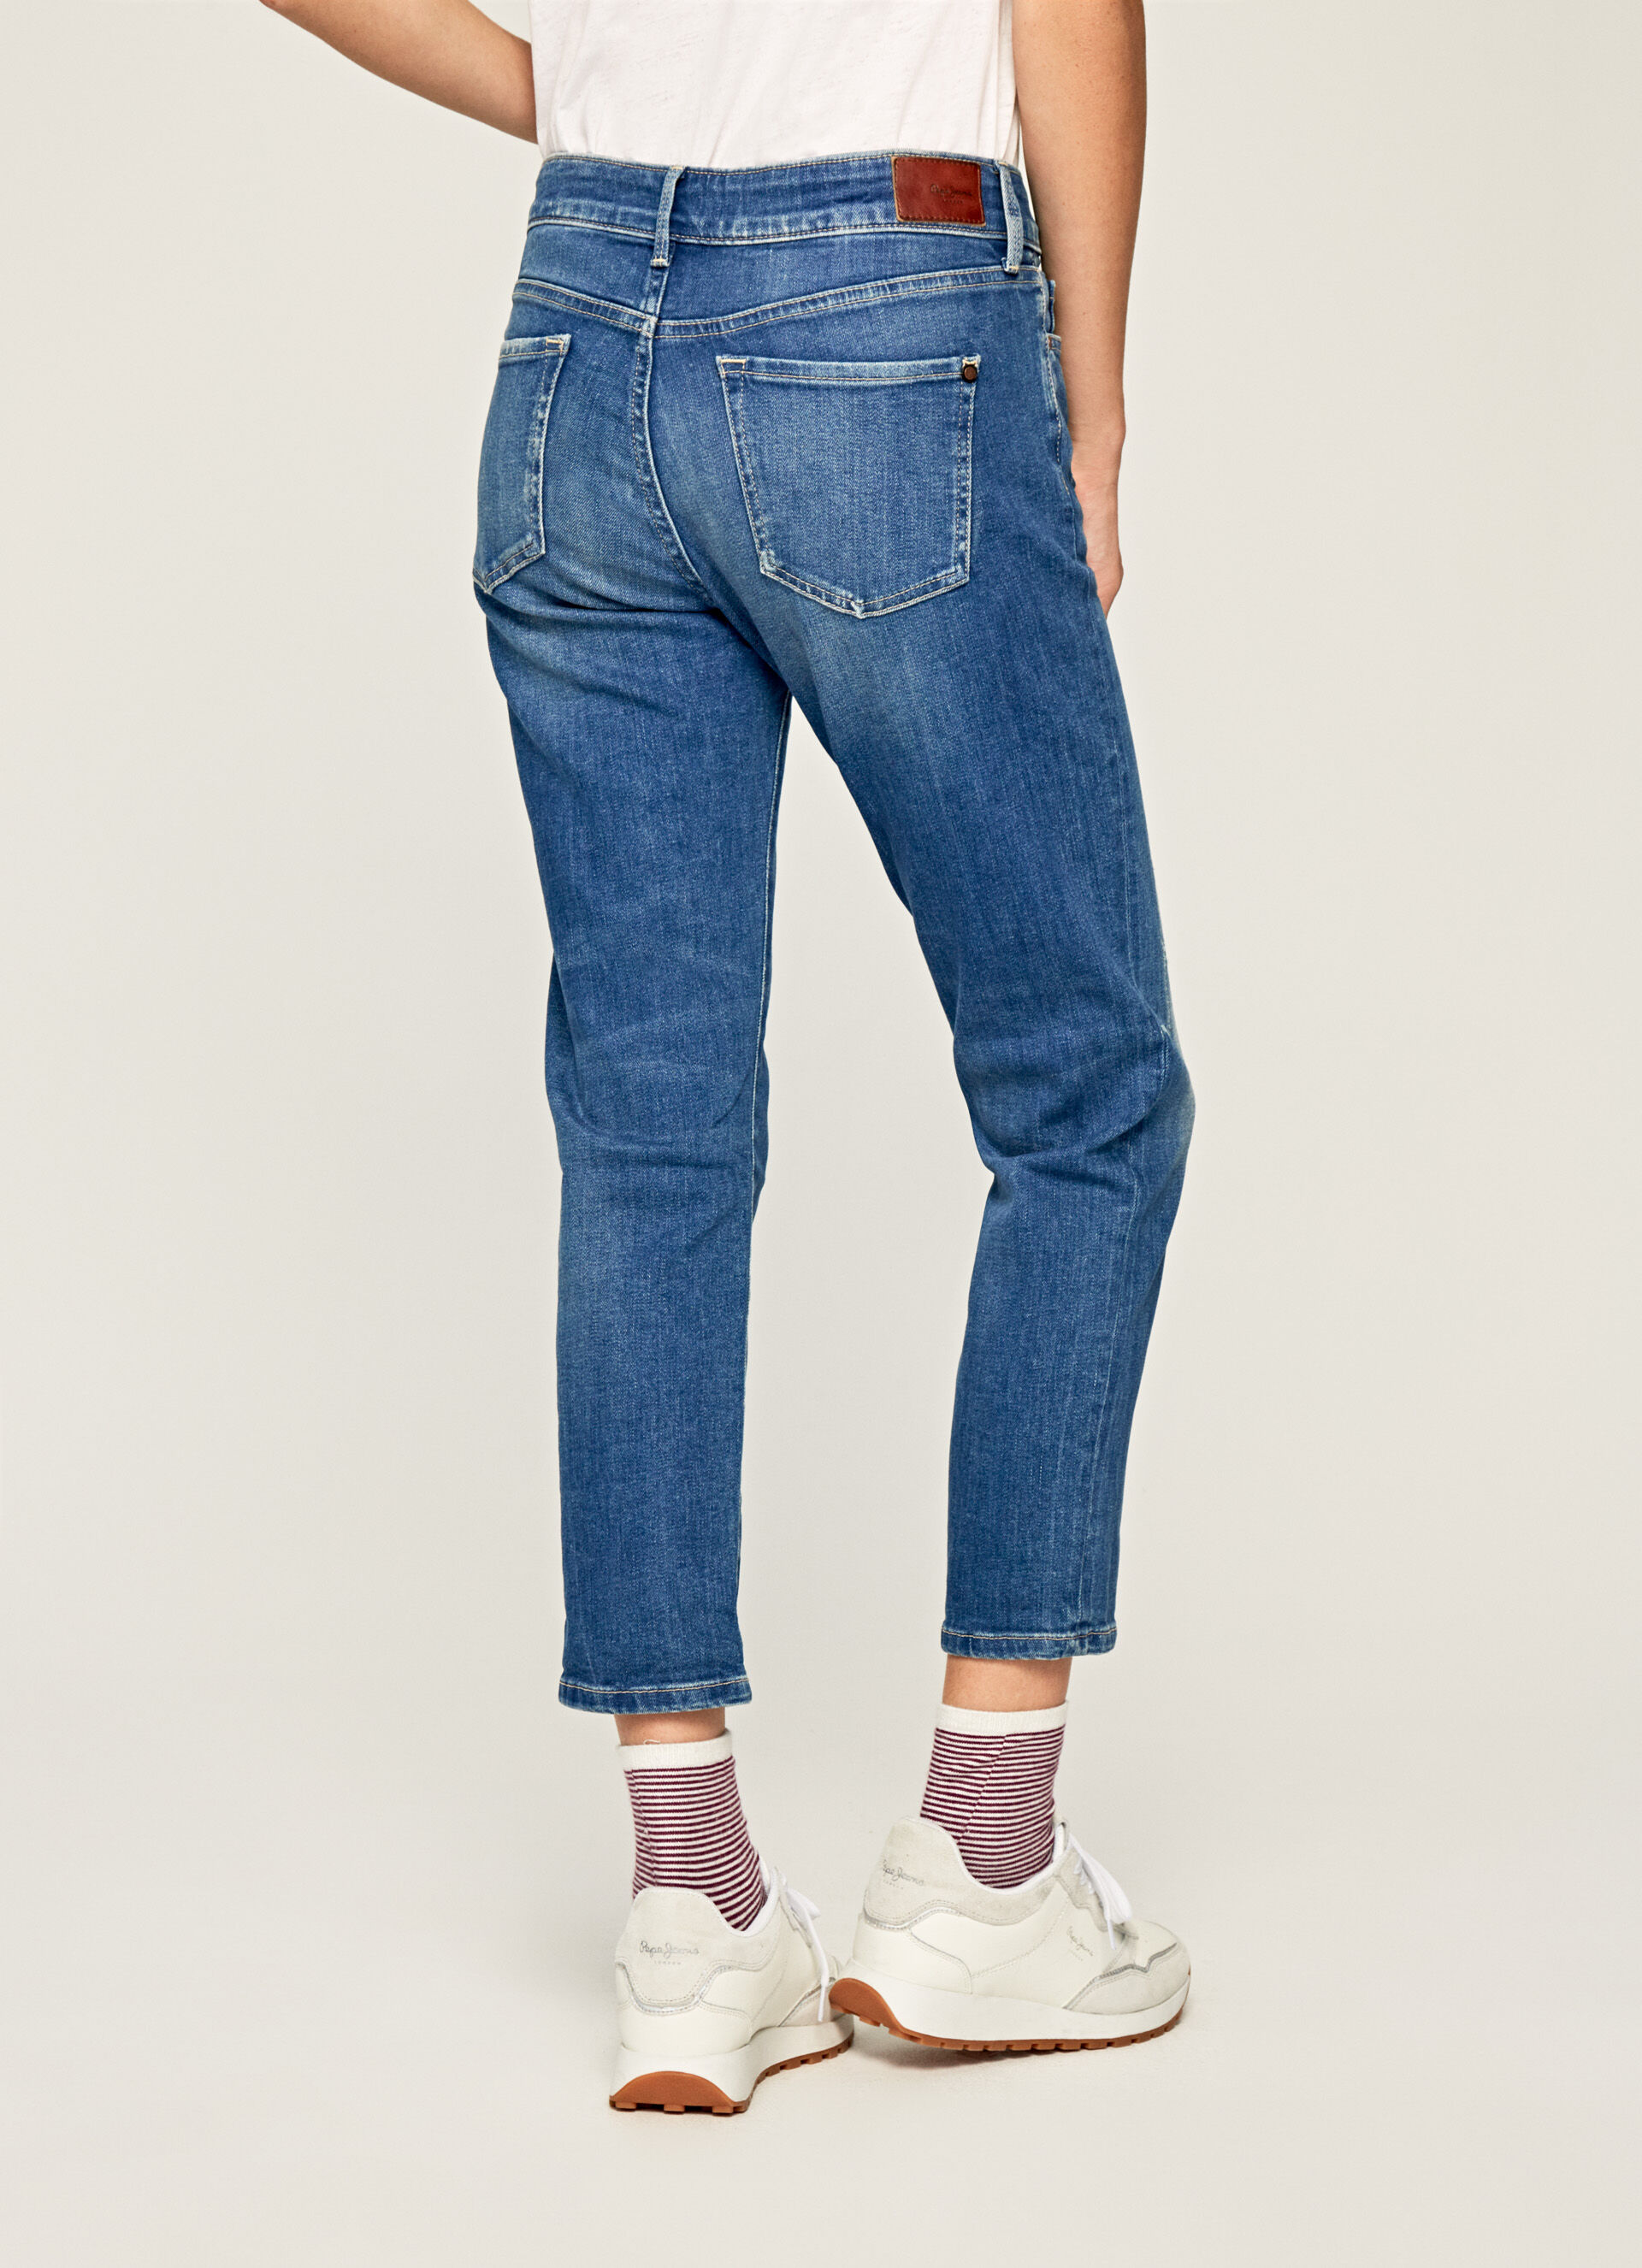 PL203040RF1 джинсы jolie pepe jeans 